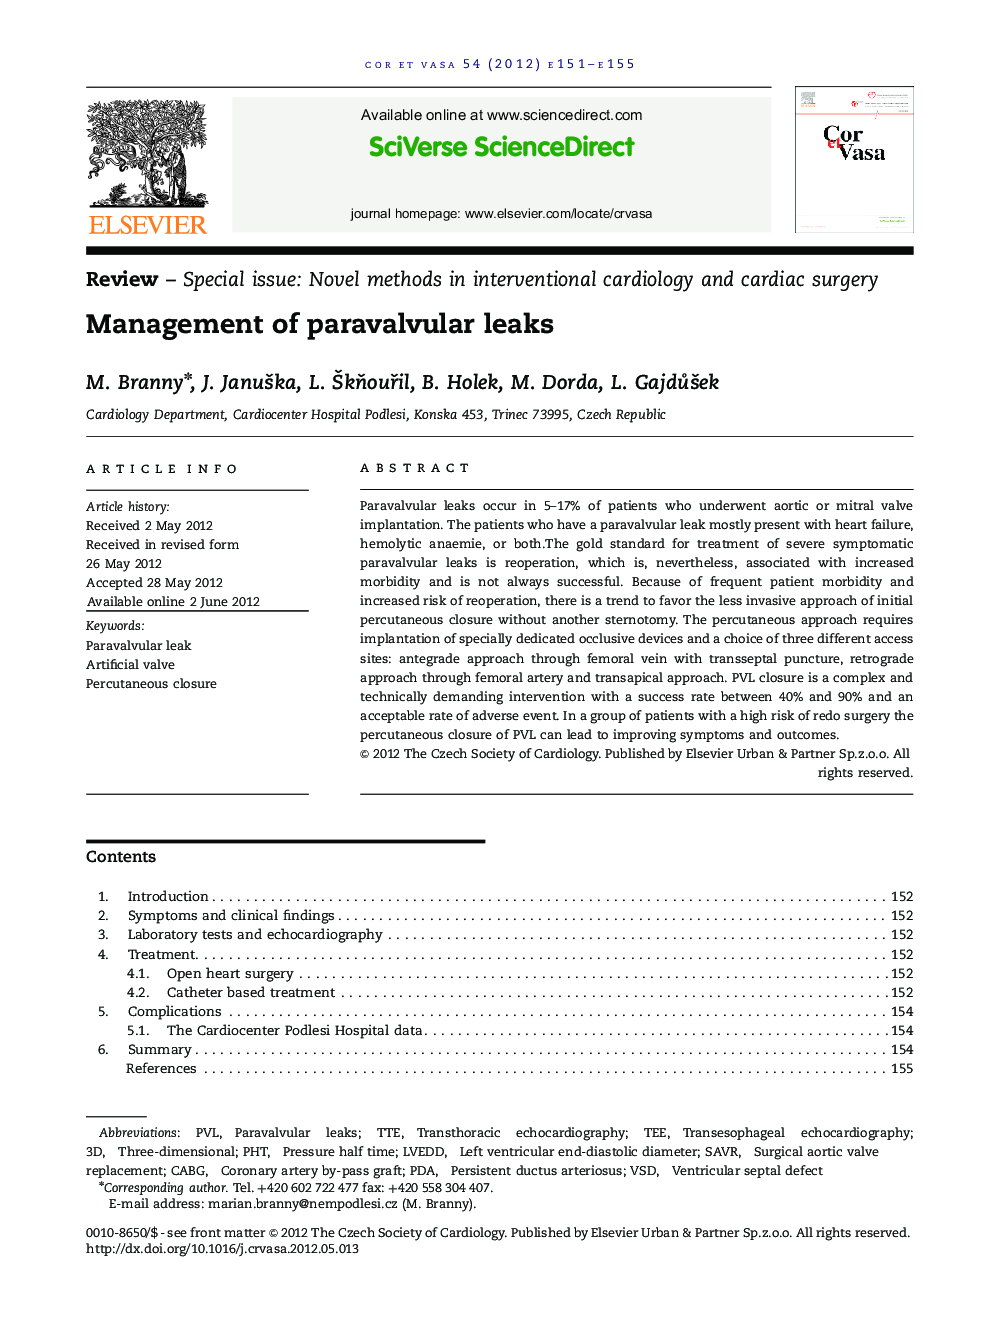 Management of paravalvular leaks